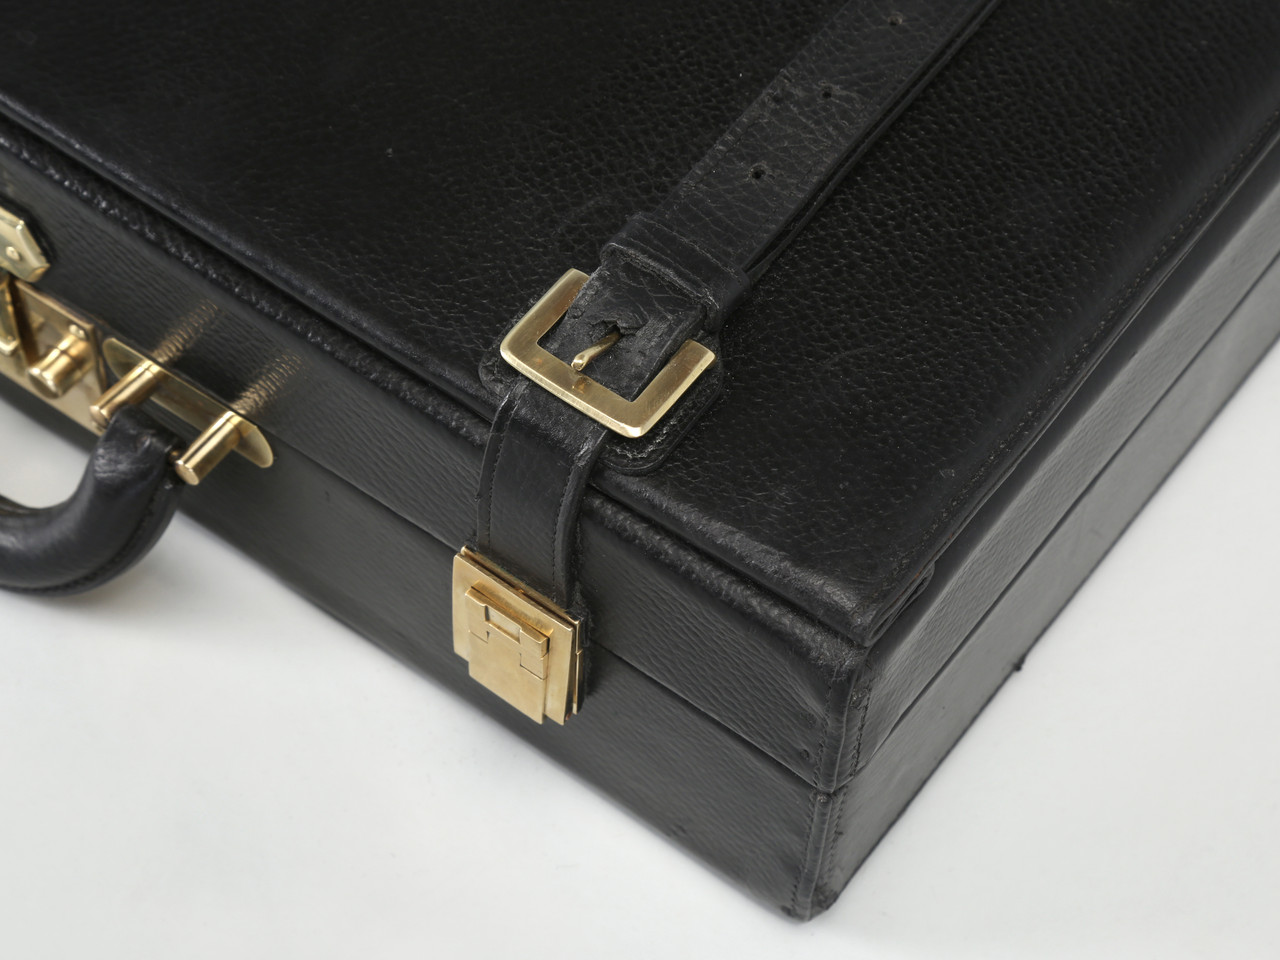 Hermès 1990s Pre-owned Flap Leather Briefcase - Neutrals